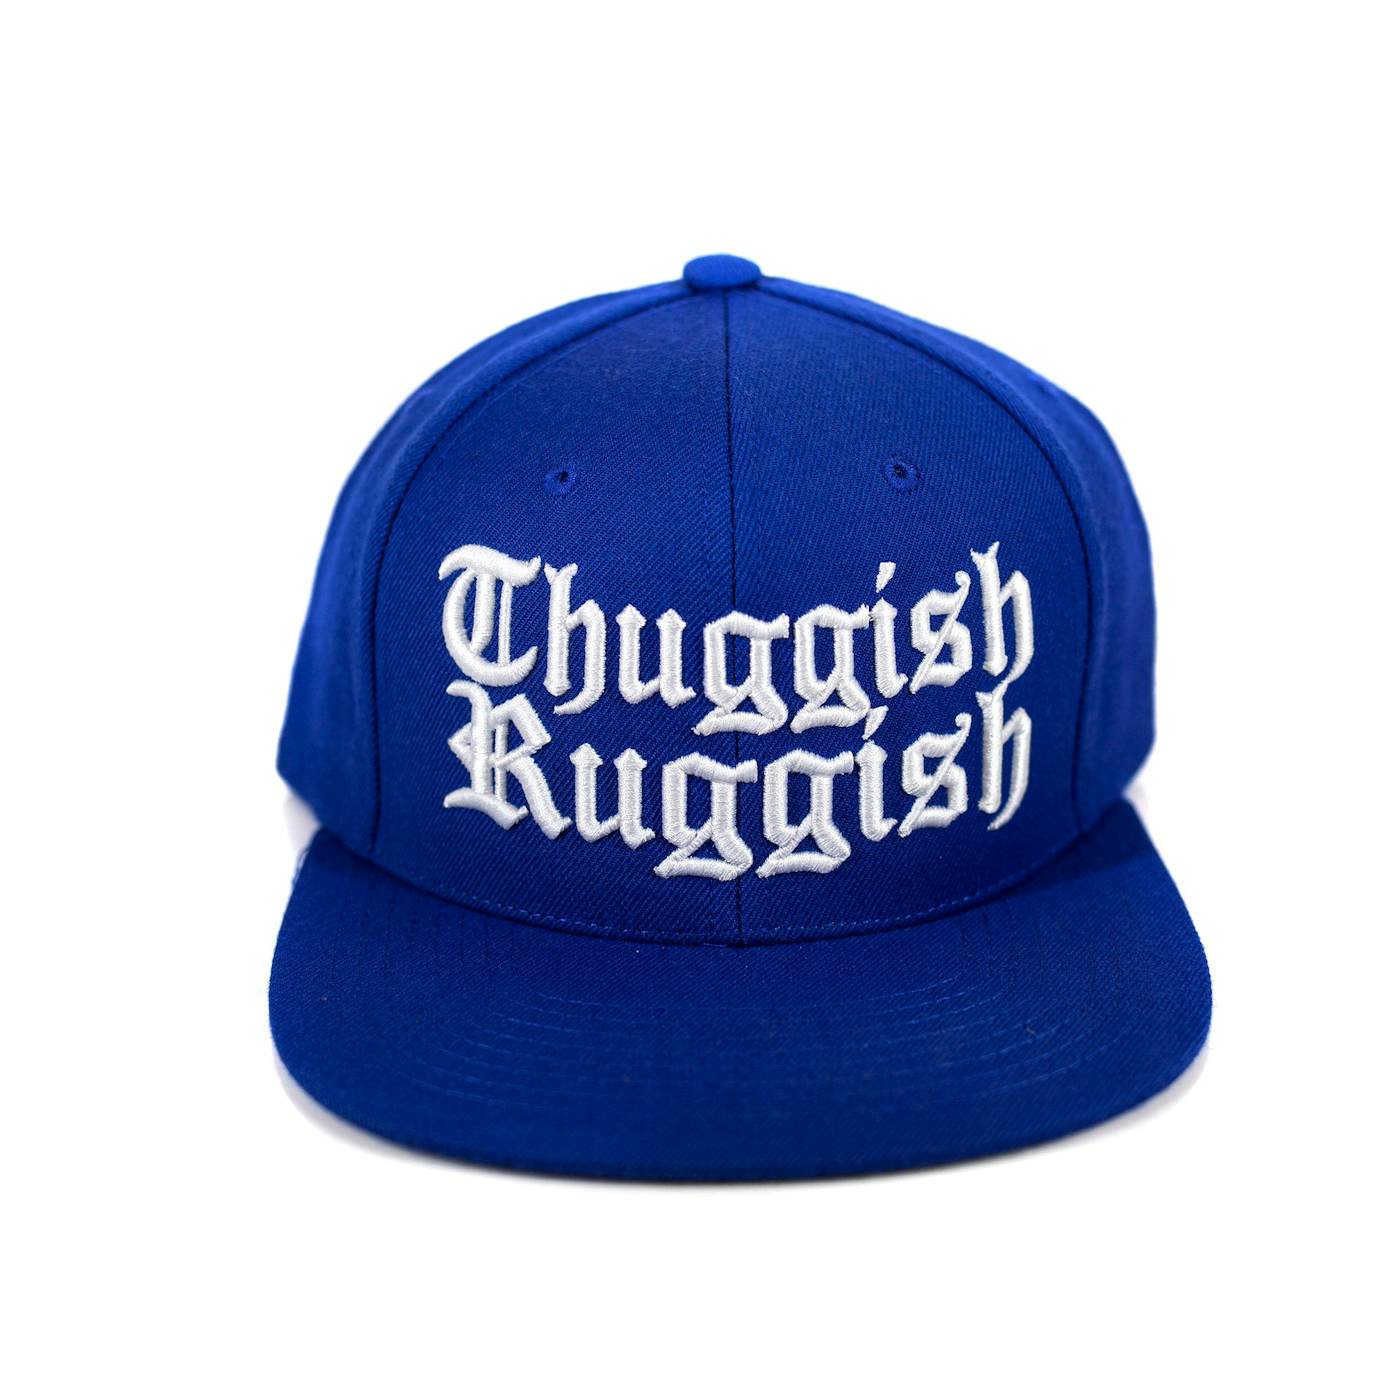 Bone Thugs-N-Harmony Thuggish Ruggish "Royal Blue" Snapback